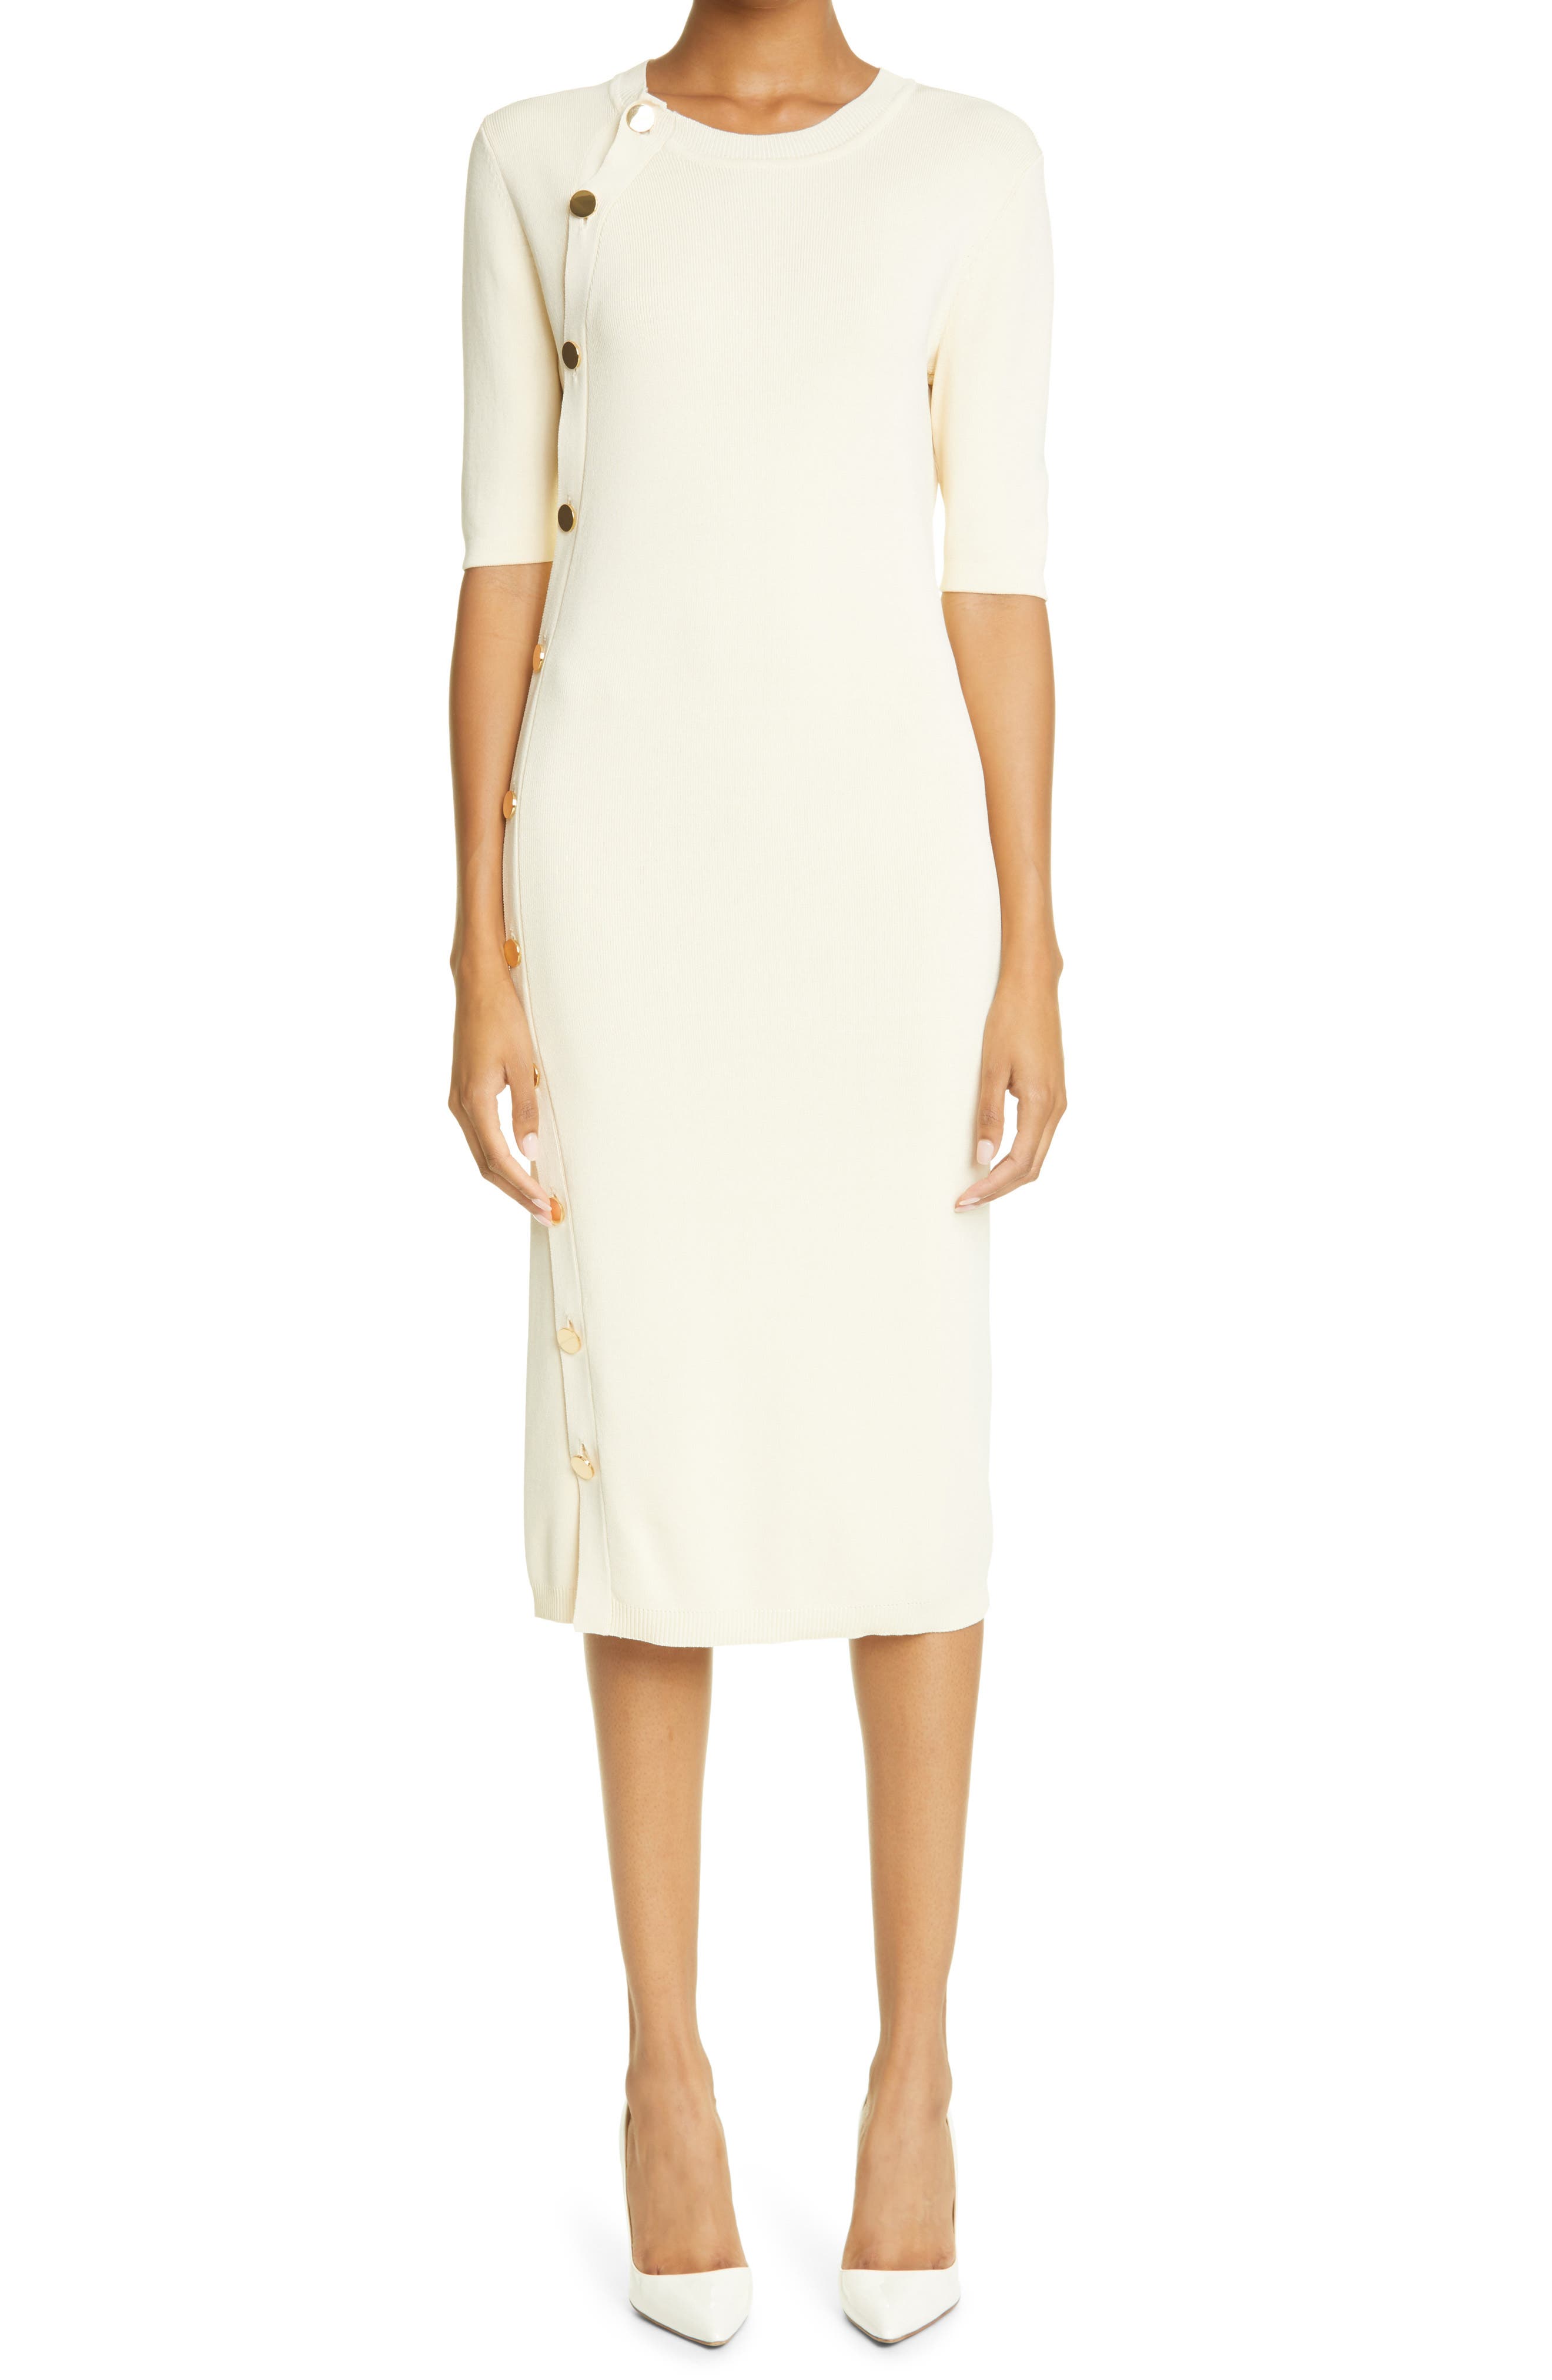 Altuzarra Topaz Side Button Shift Dress in Ivory at Nordstrom, Size Medium